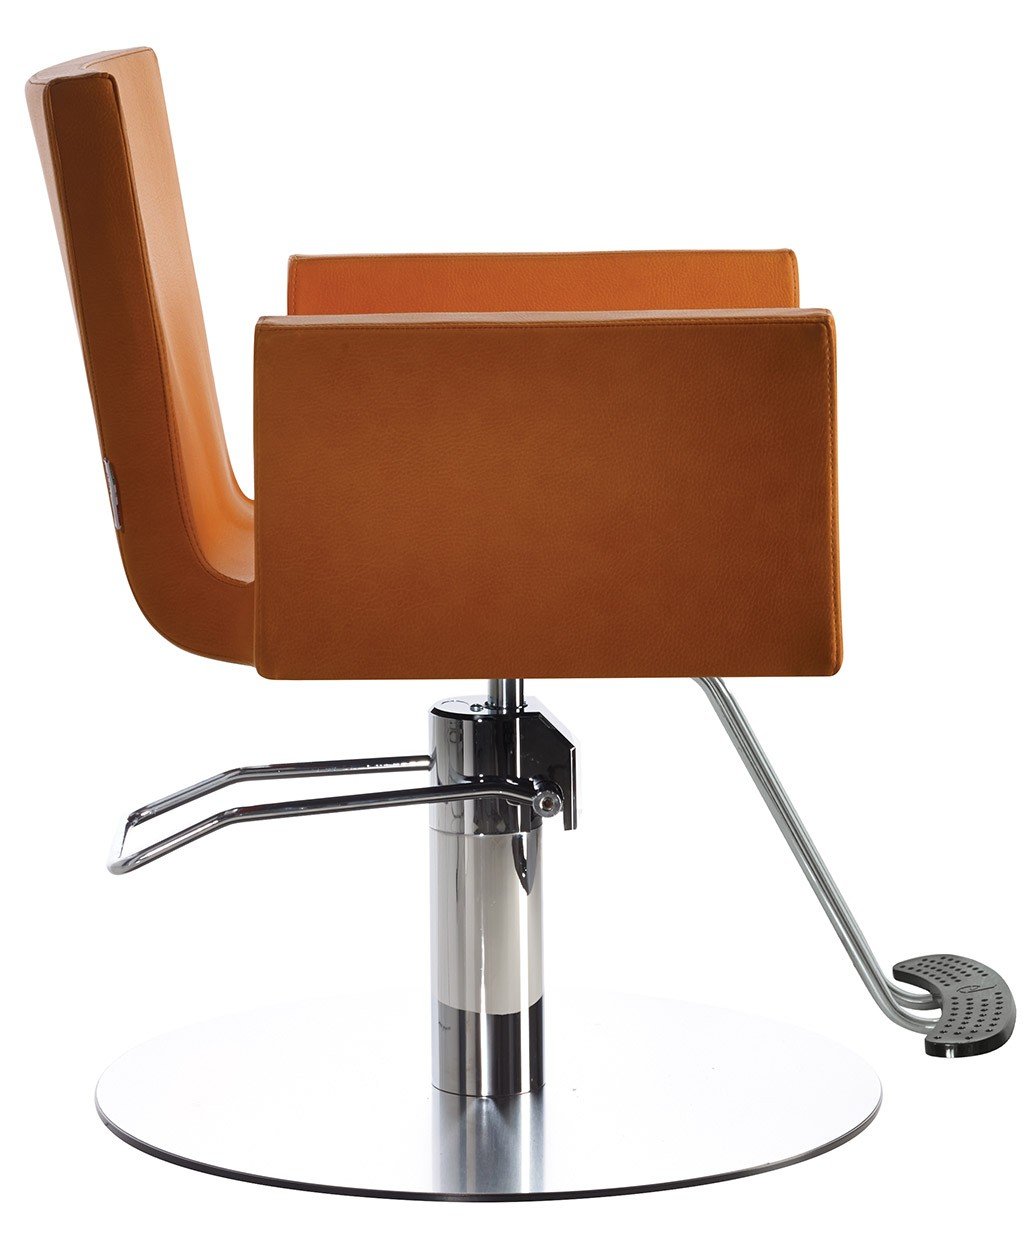 Luca Rossini Mia Styling Chair